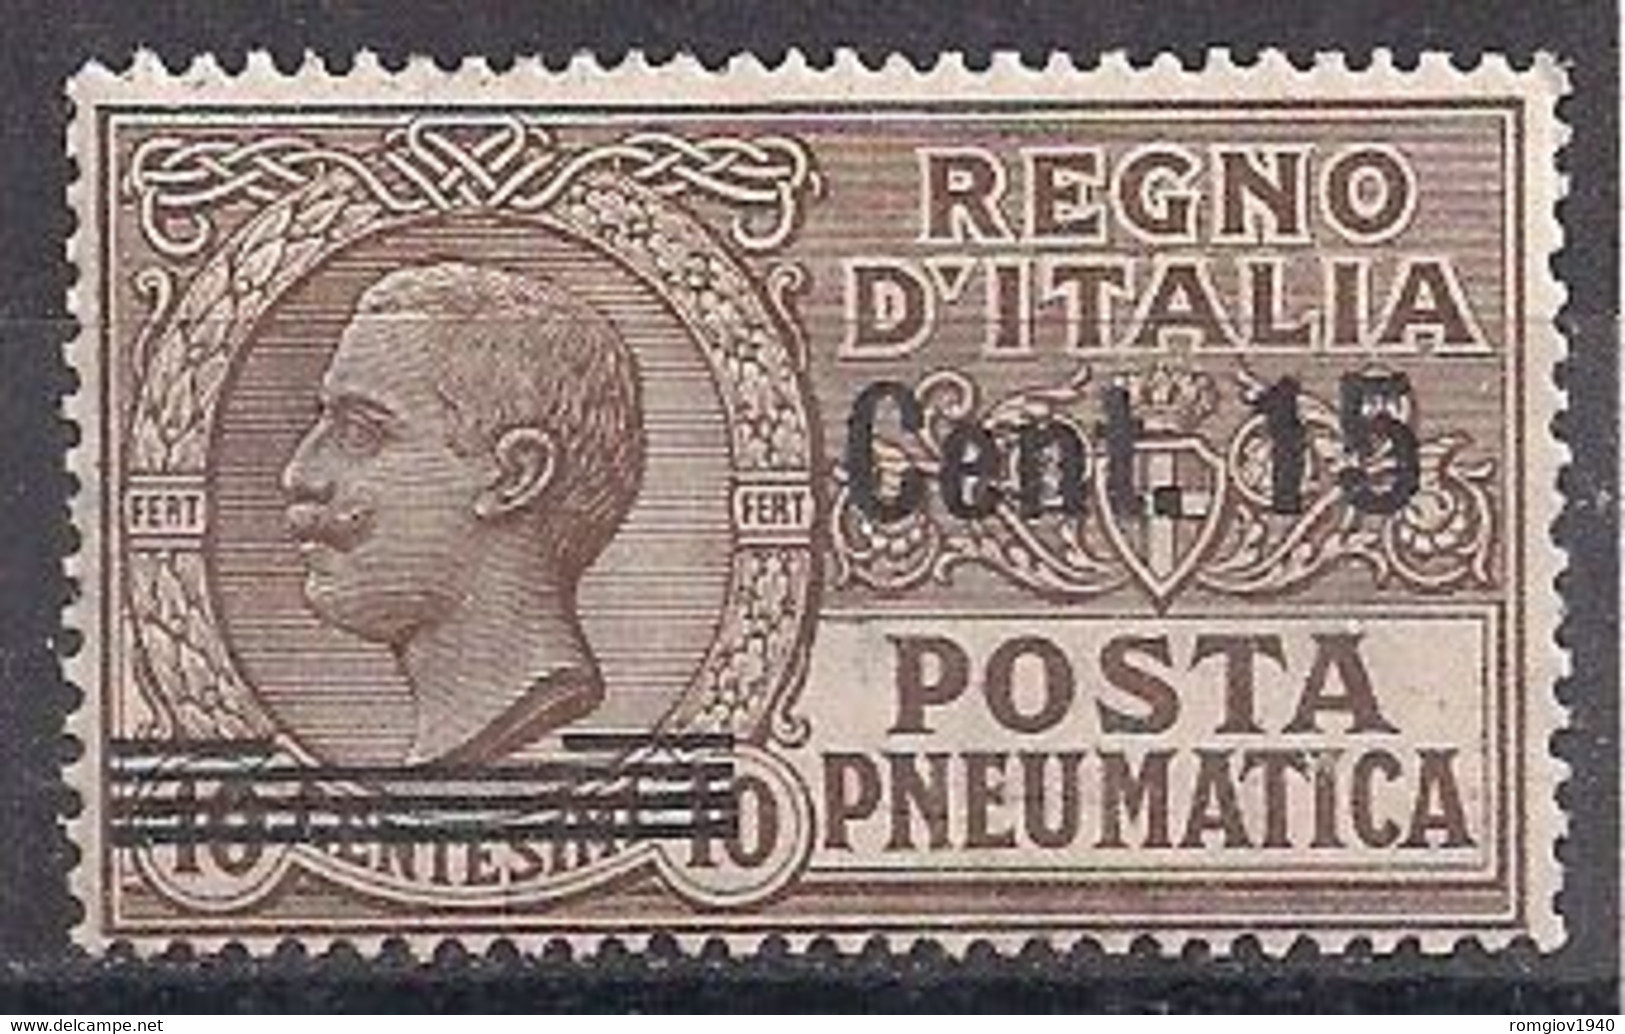 REGNO D'ITALIA POSTA PNEUMATICA 1913-1923 EFFIGE DI V.EMANUELE III SASS. 4 MLH VF - Pneumatische Post